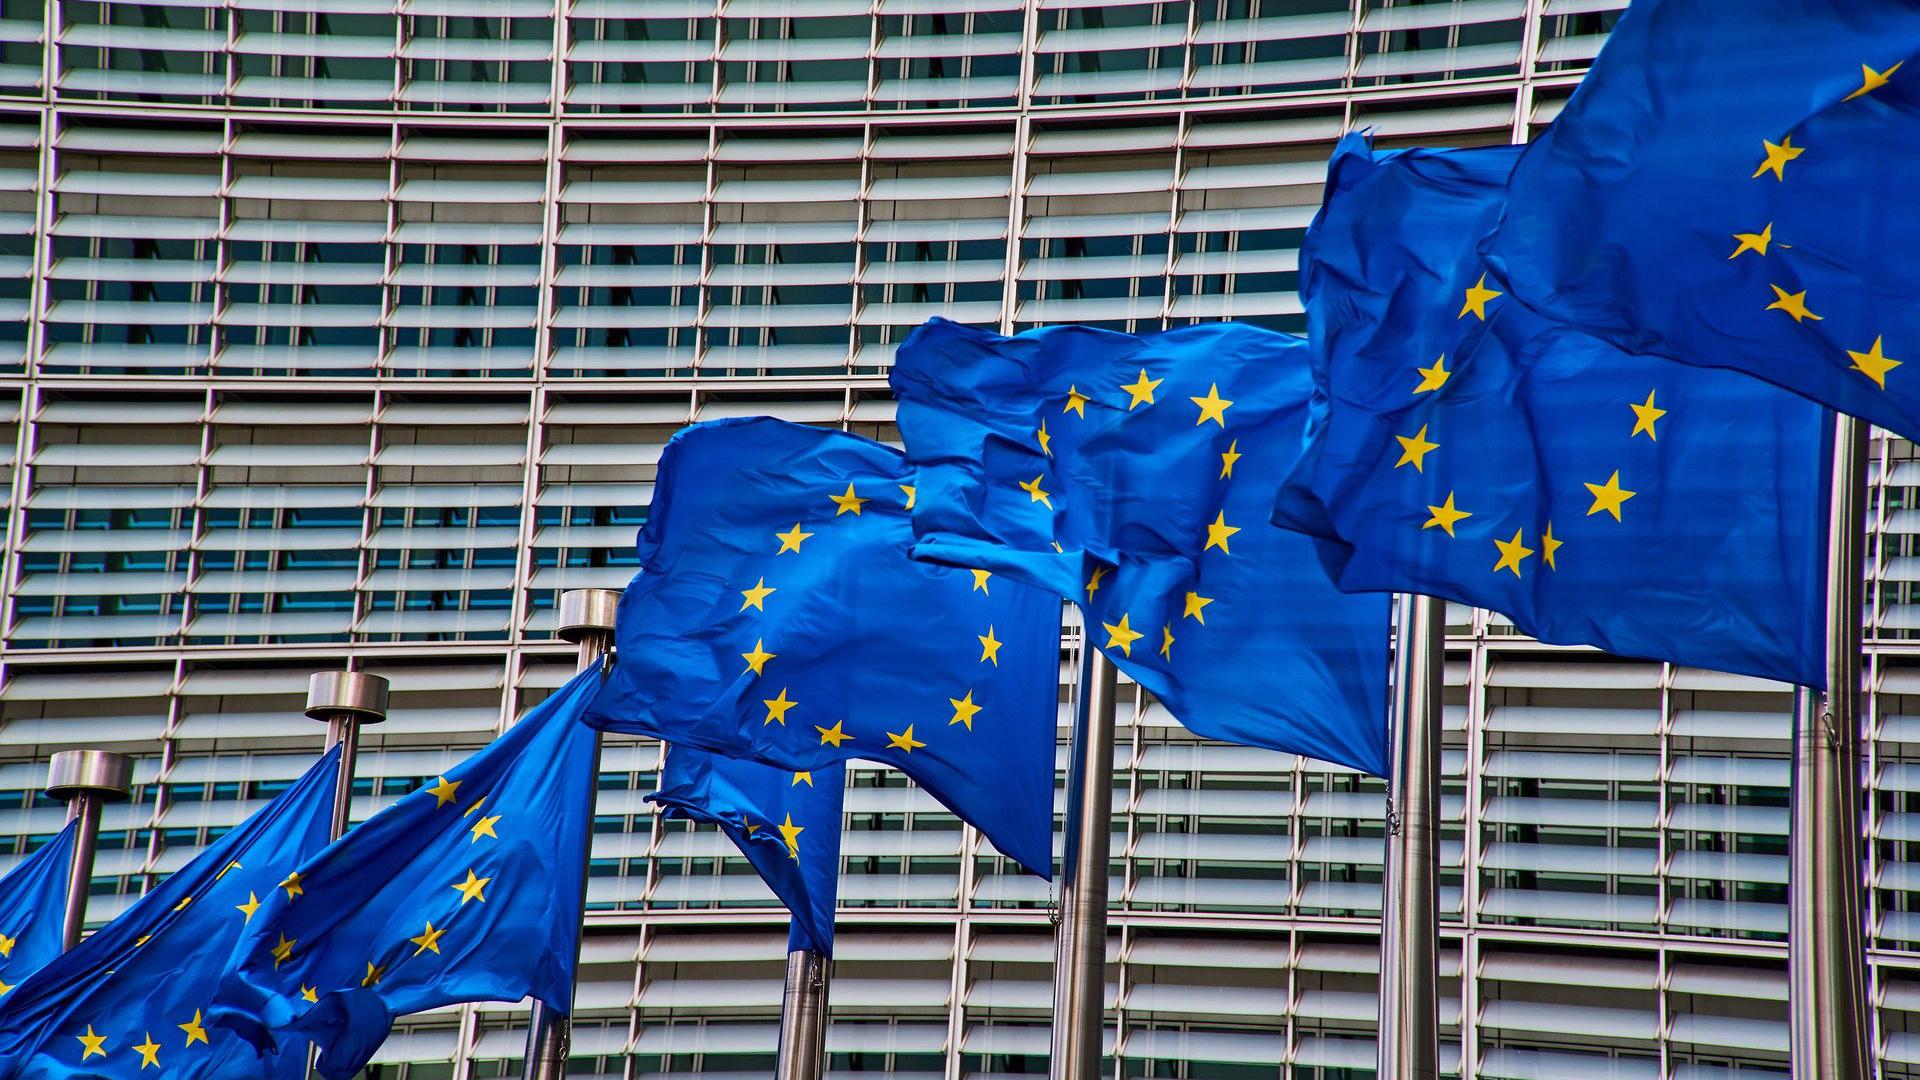 EU flags - Commission